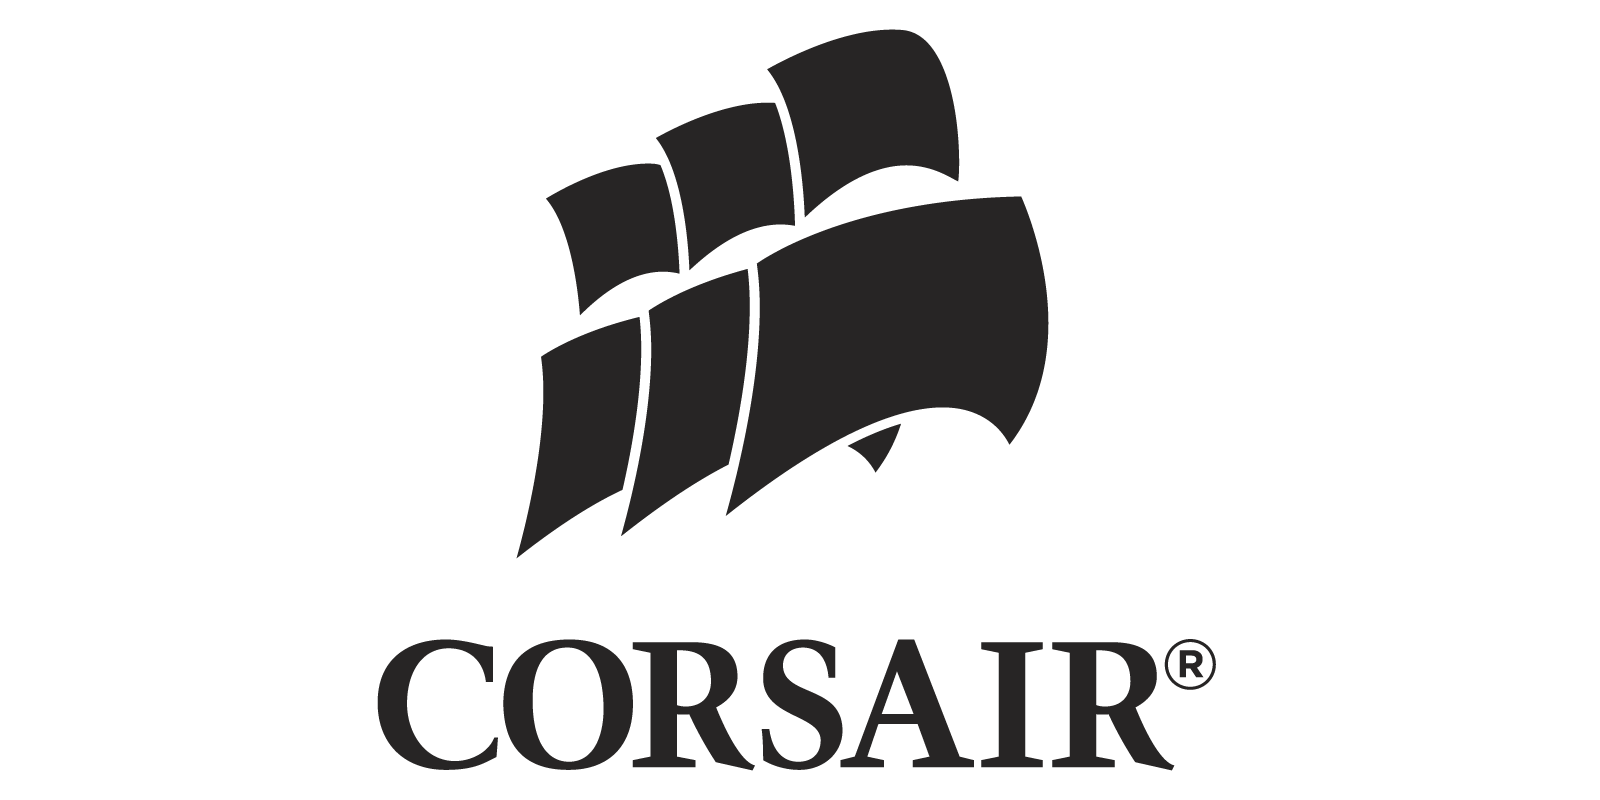 Corsair Png Hdpng.com 1600 - Corsair, Transparent background PNG HD thumbnail